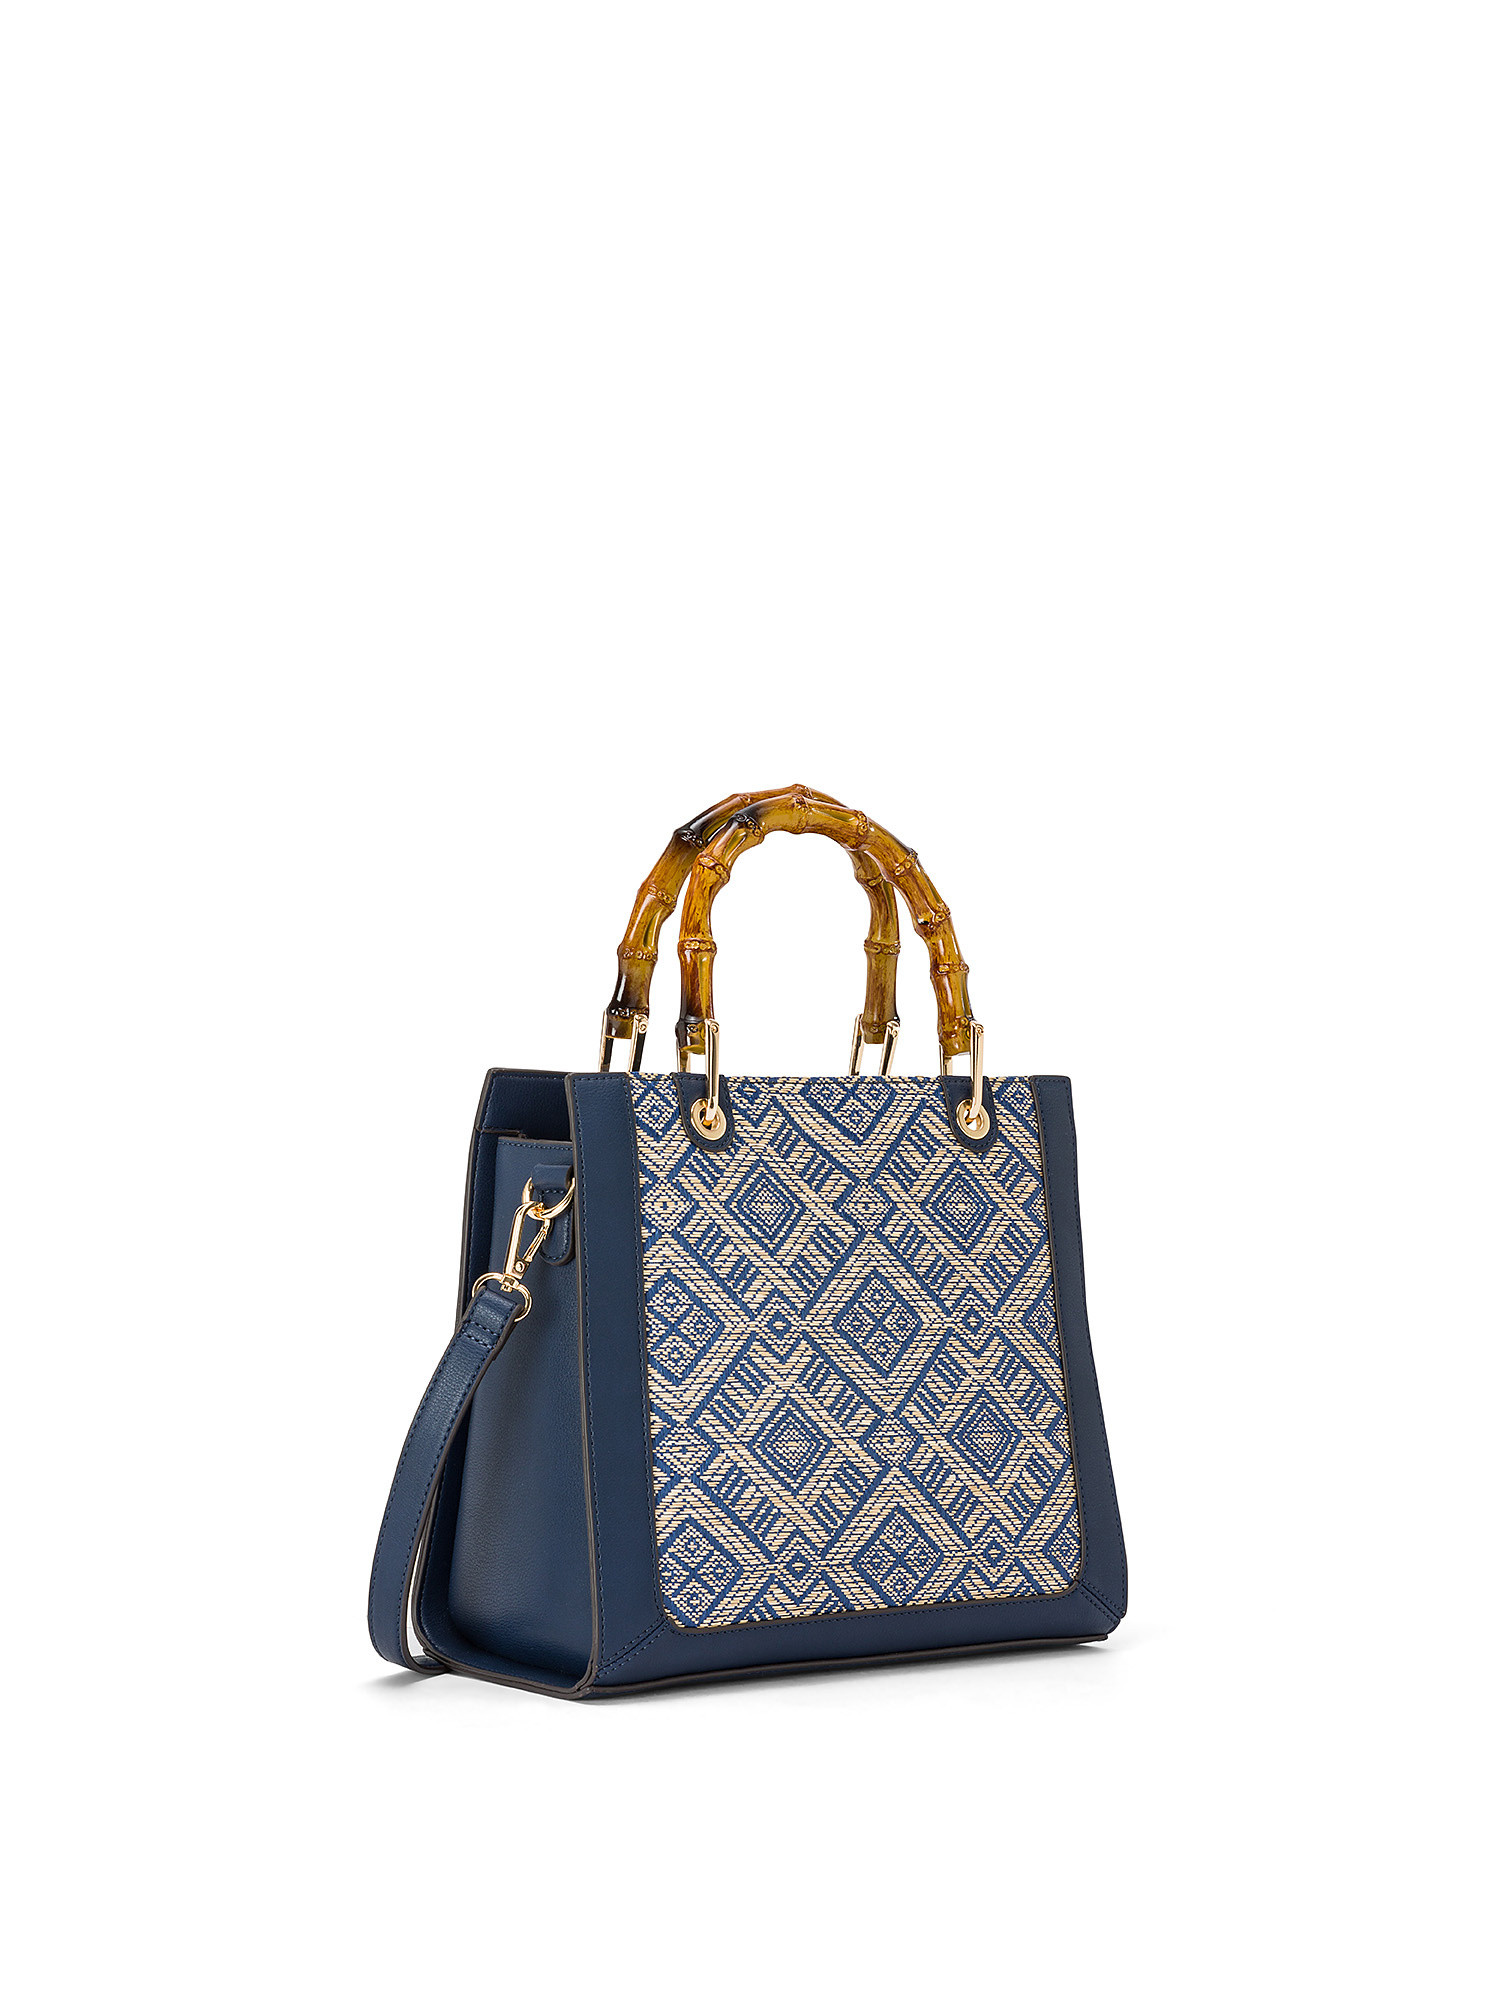 Koan - Handbag with insert, Blue, large image number 1